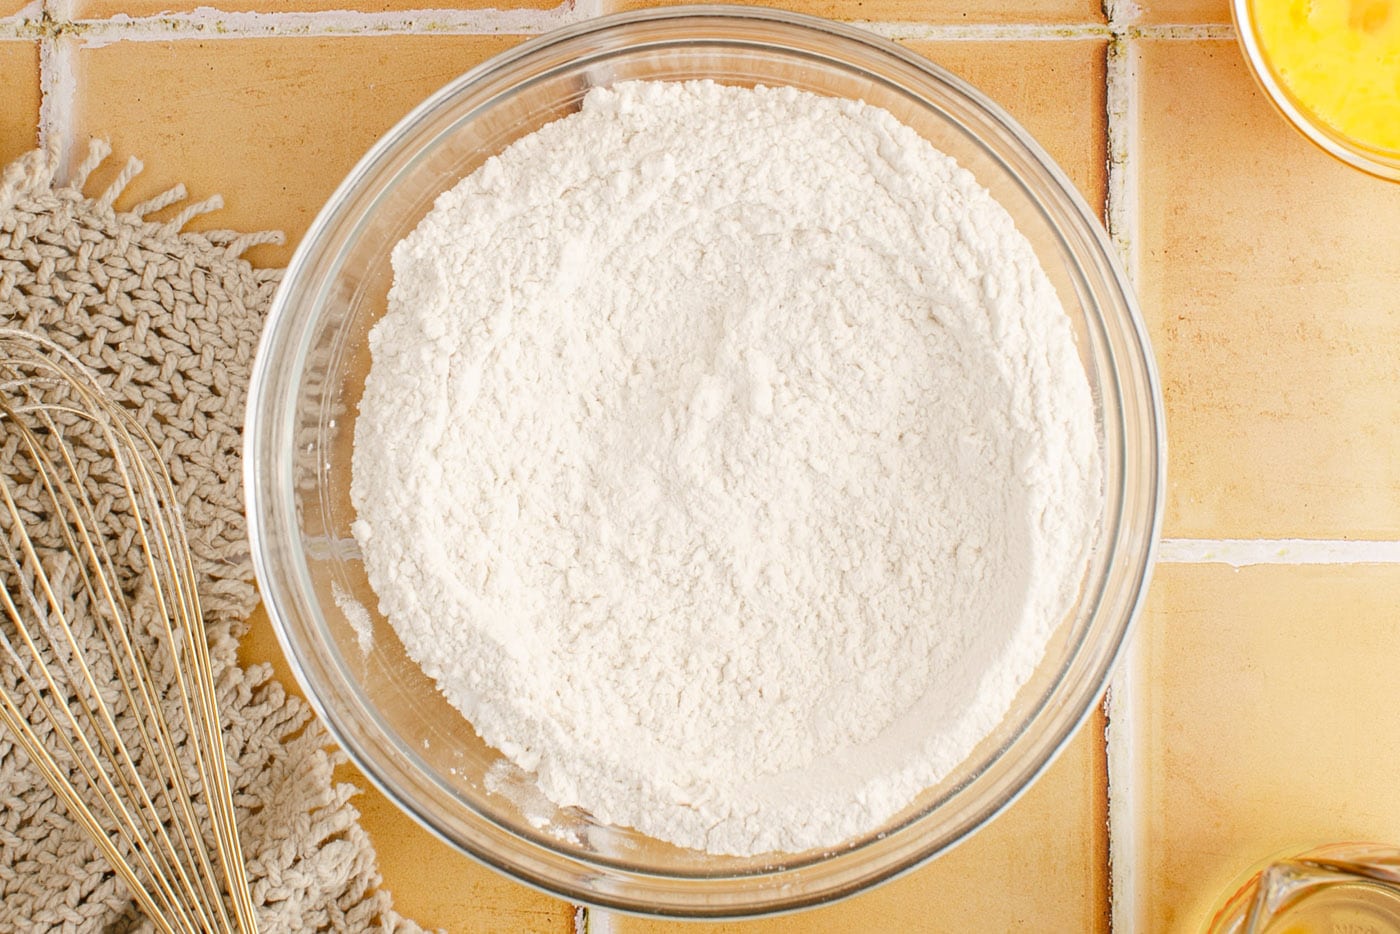 flour, baking powder, baking soda, and salt mixed in a bowl